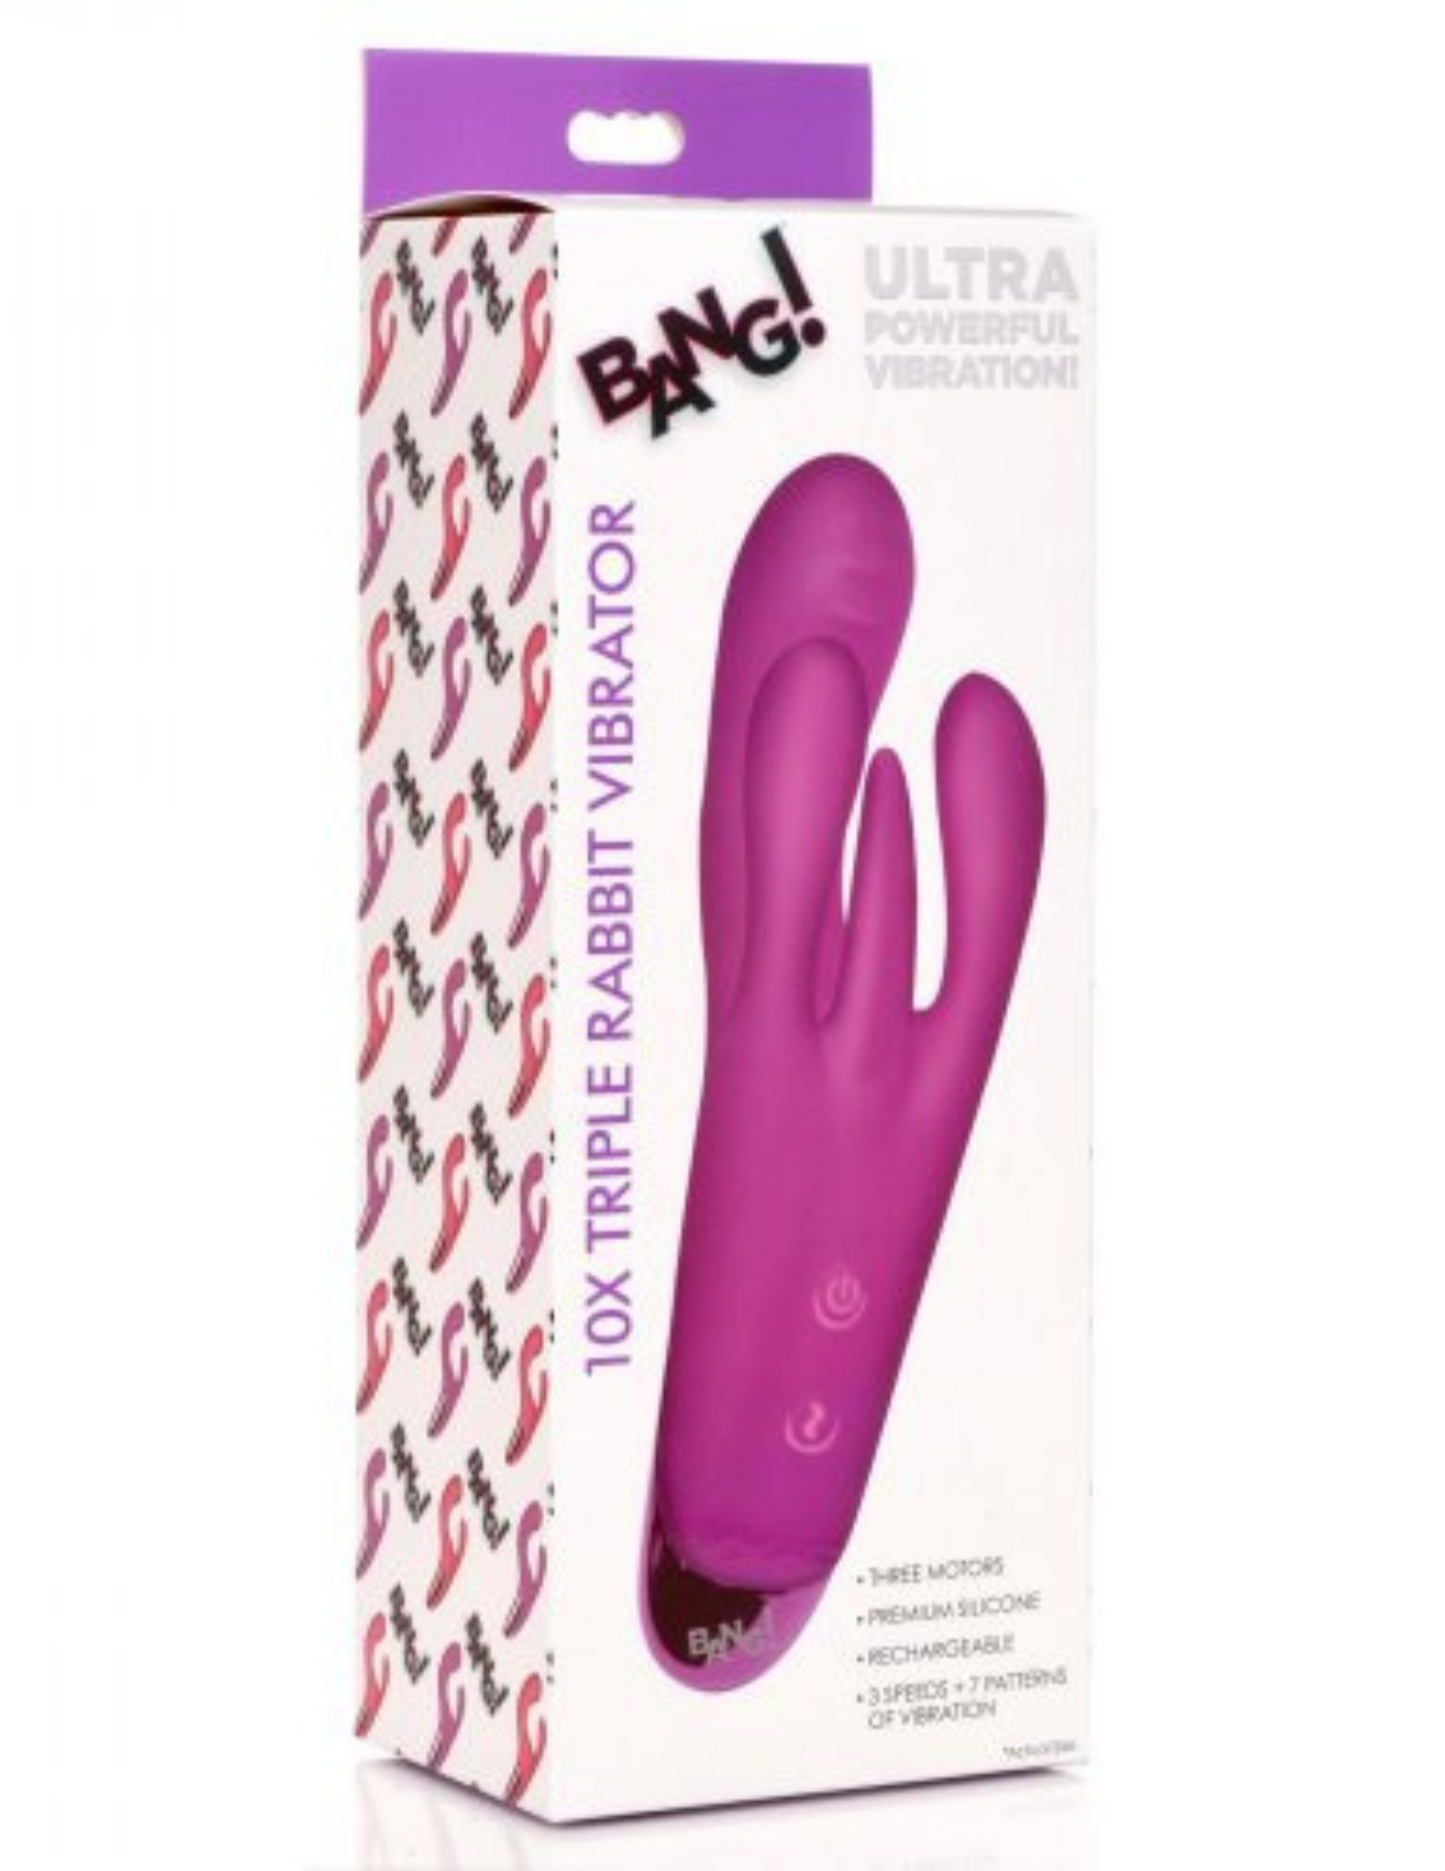 Bang! Triple Rabbit Silicone Vibrator - Pink, Purple